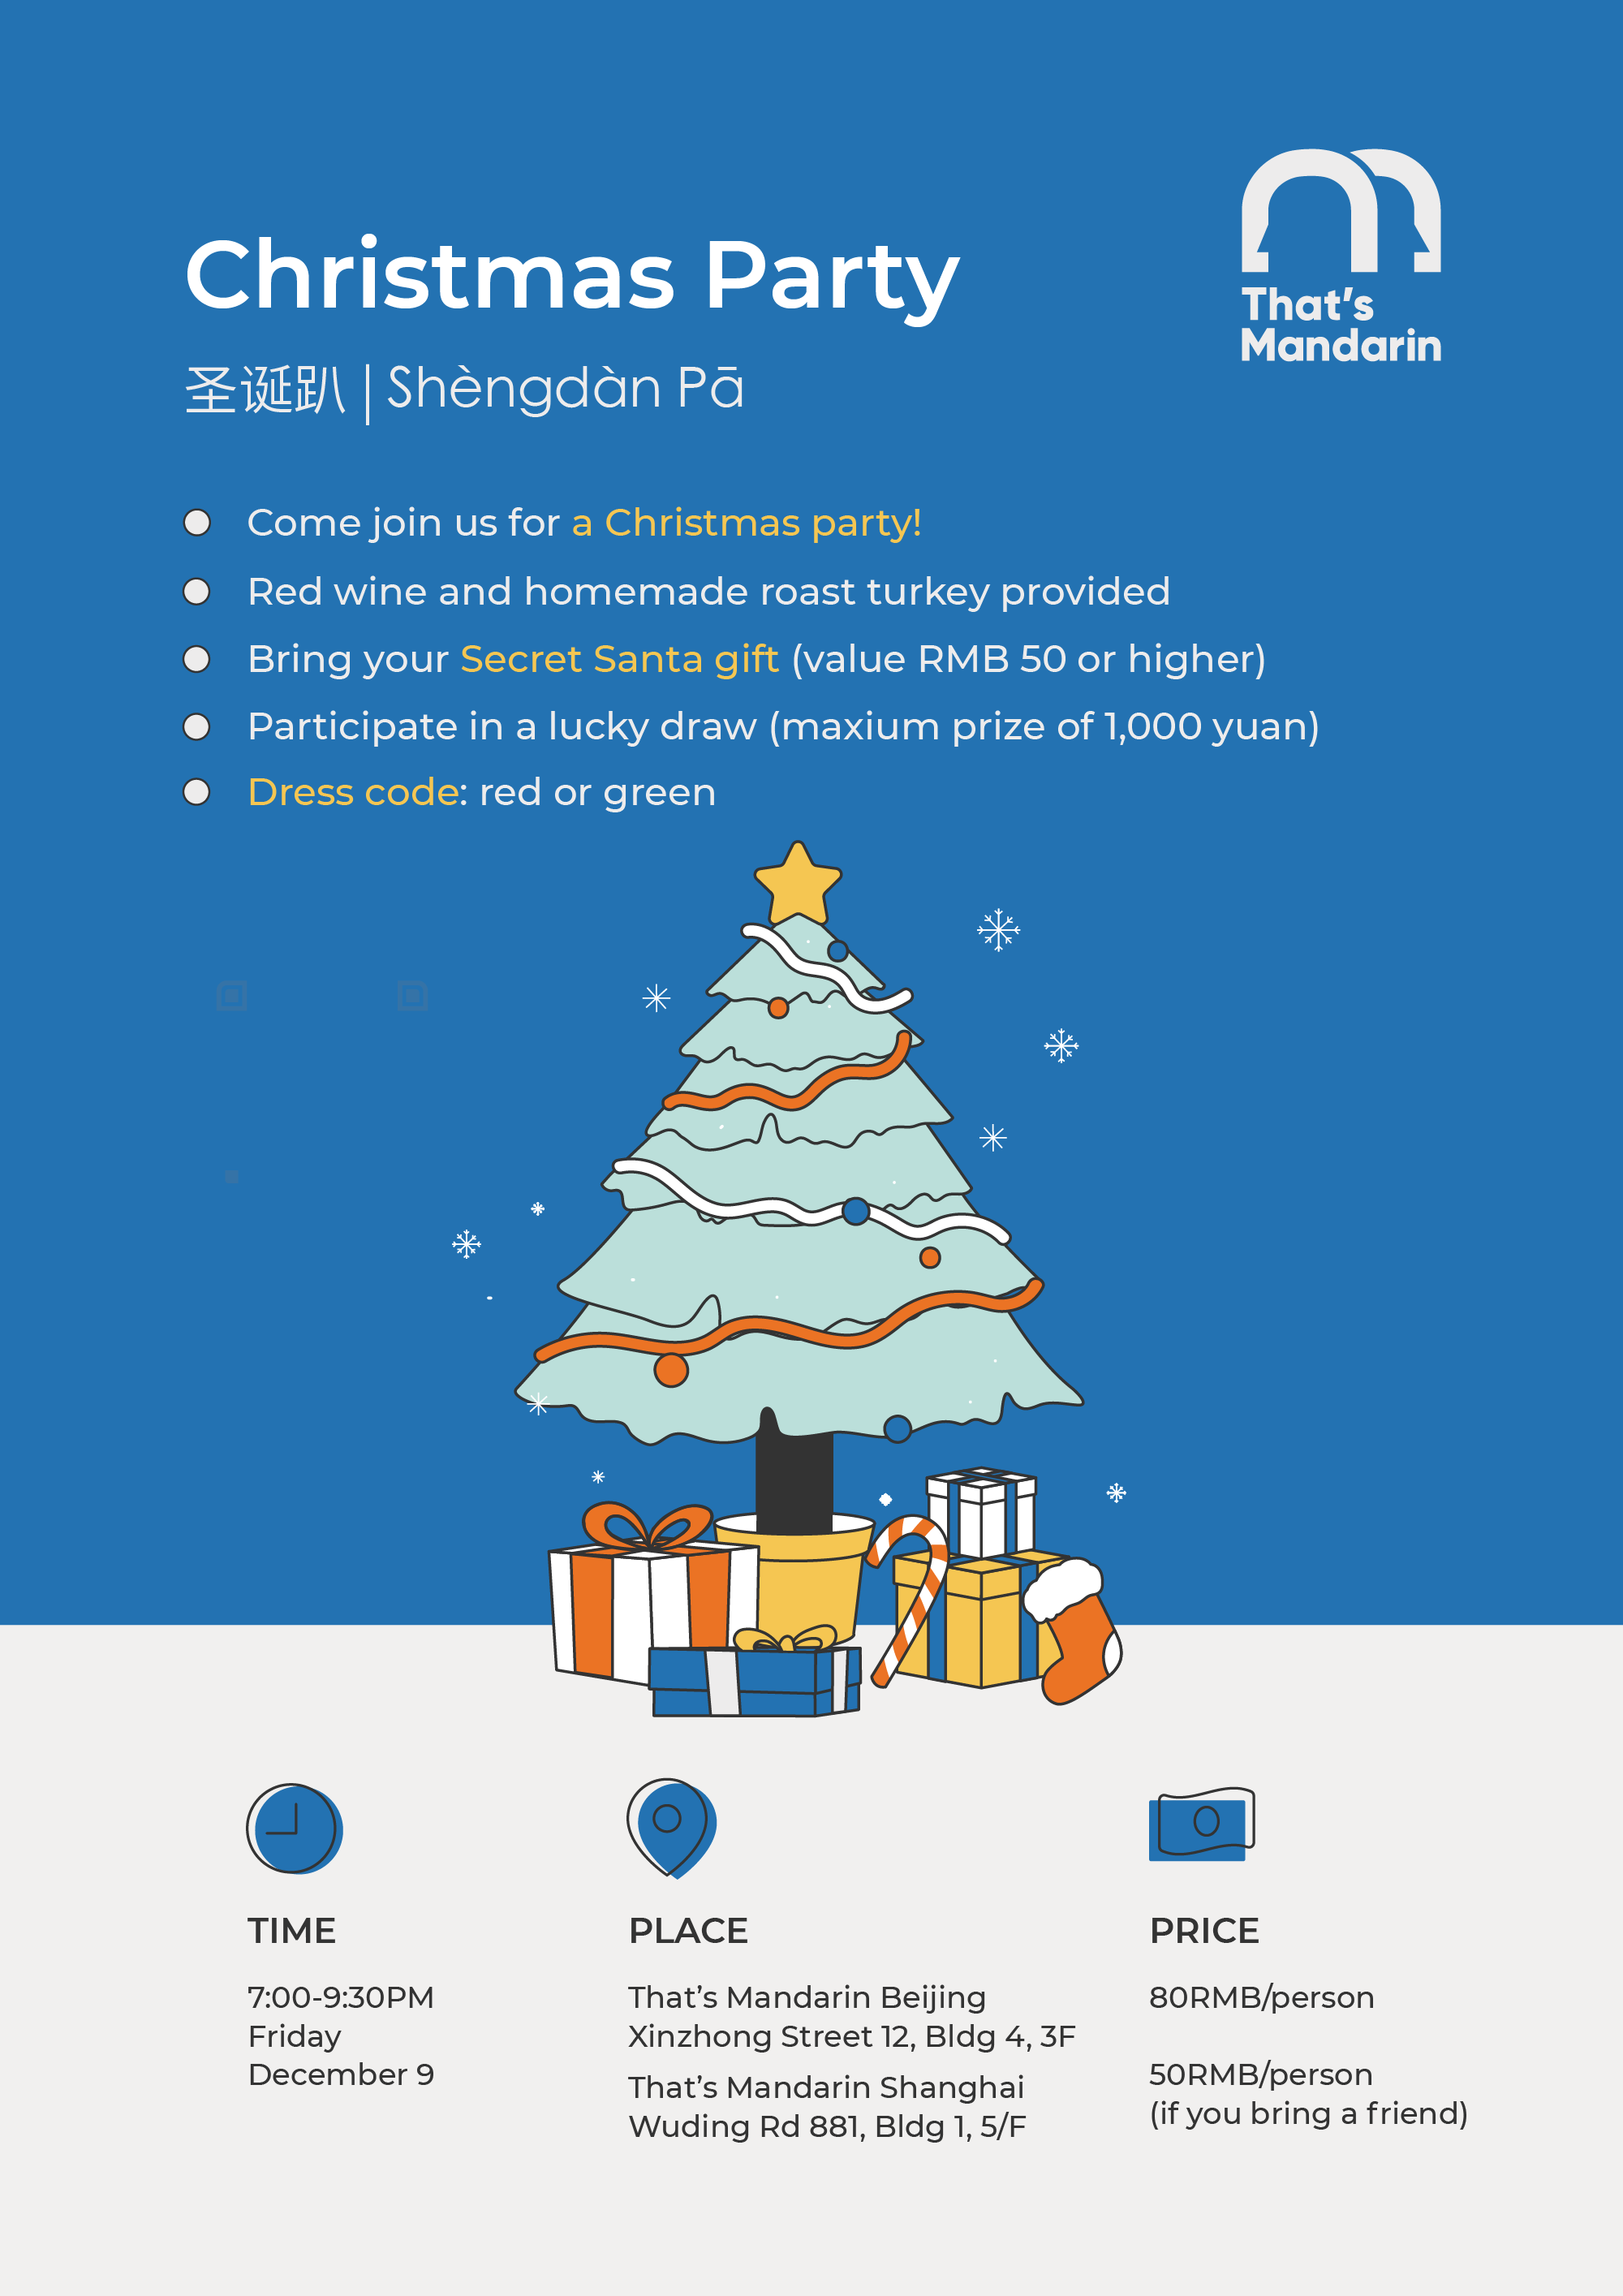 Christmas Party 2022 | That's Mandarin Christmas Party 2021 | That's Mandarin Beijing